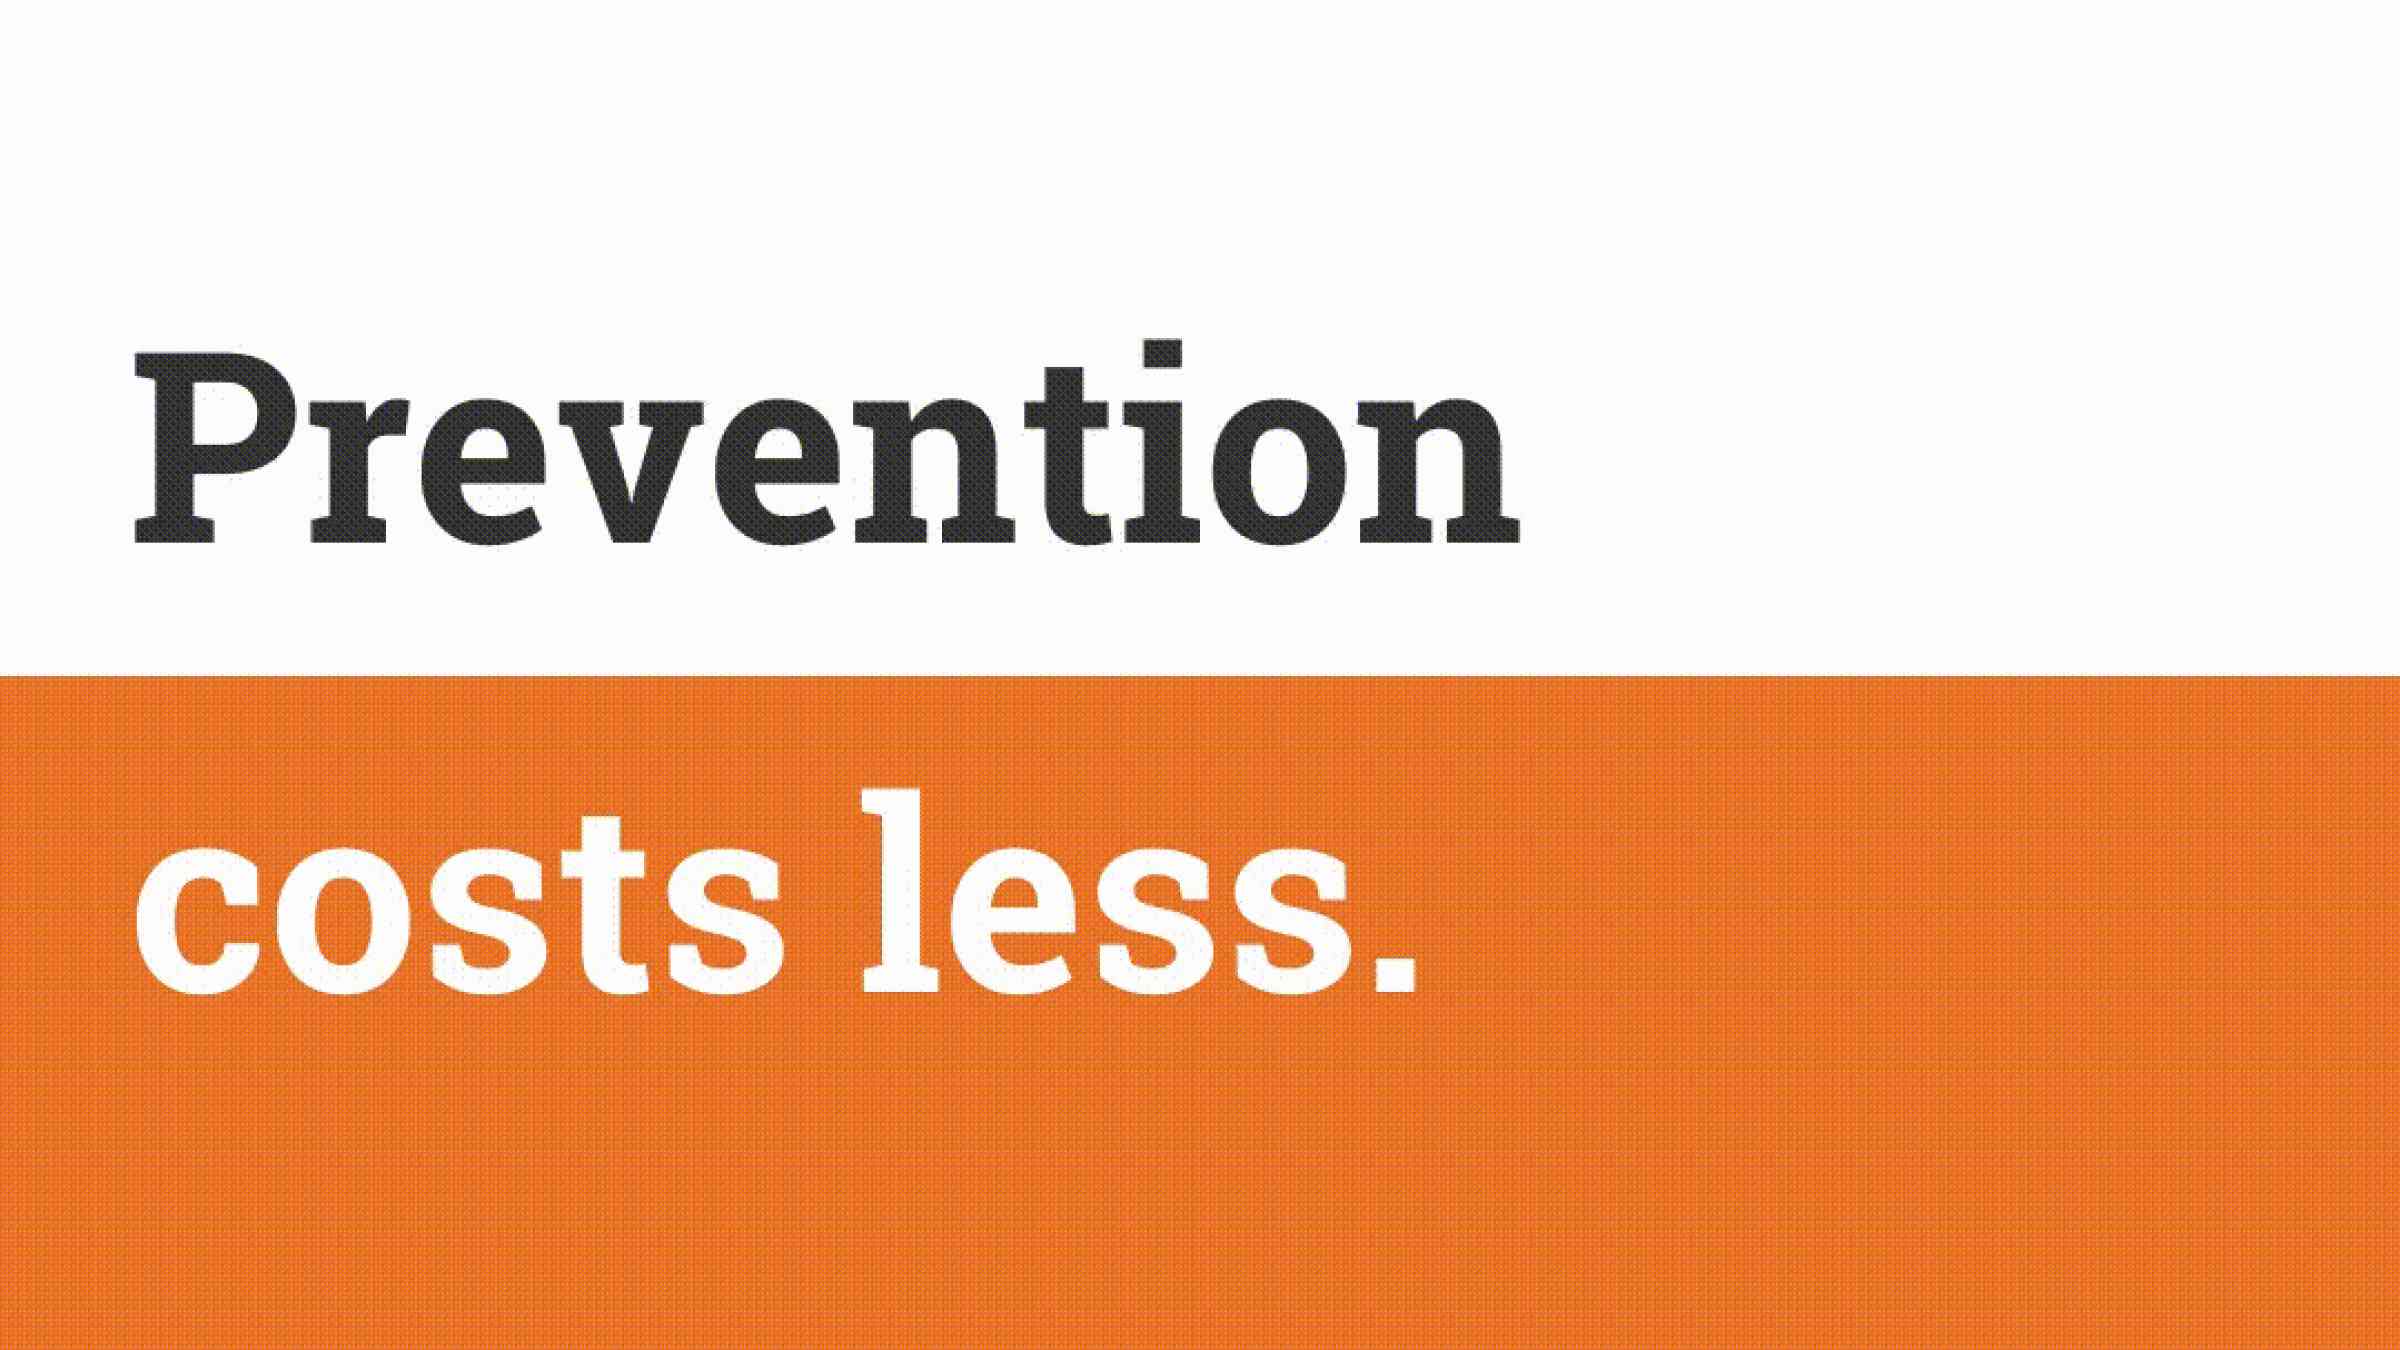 Prevention Saves Lives